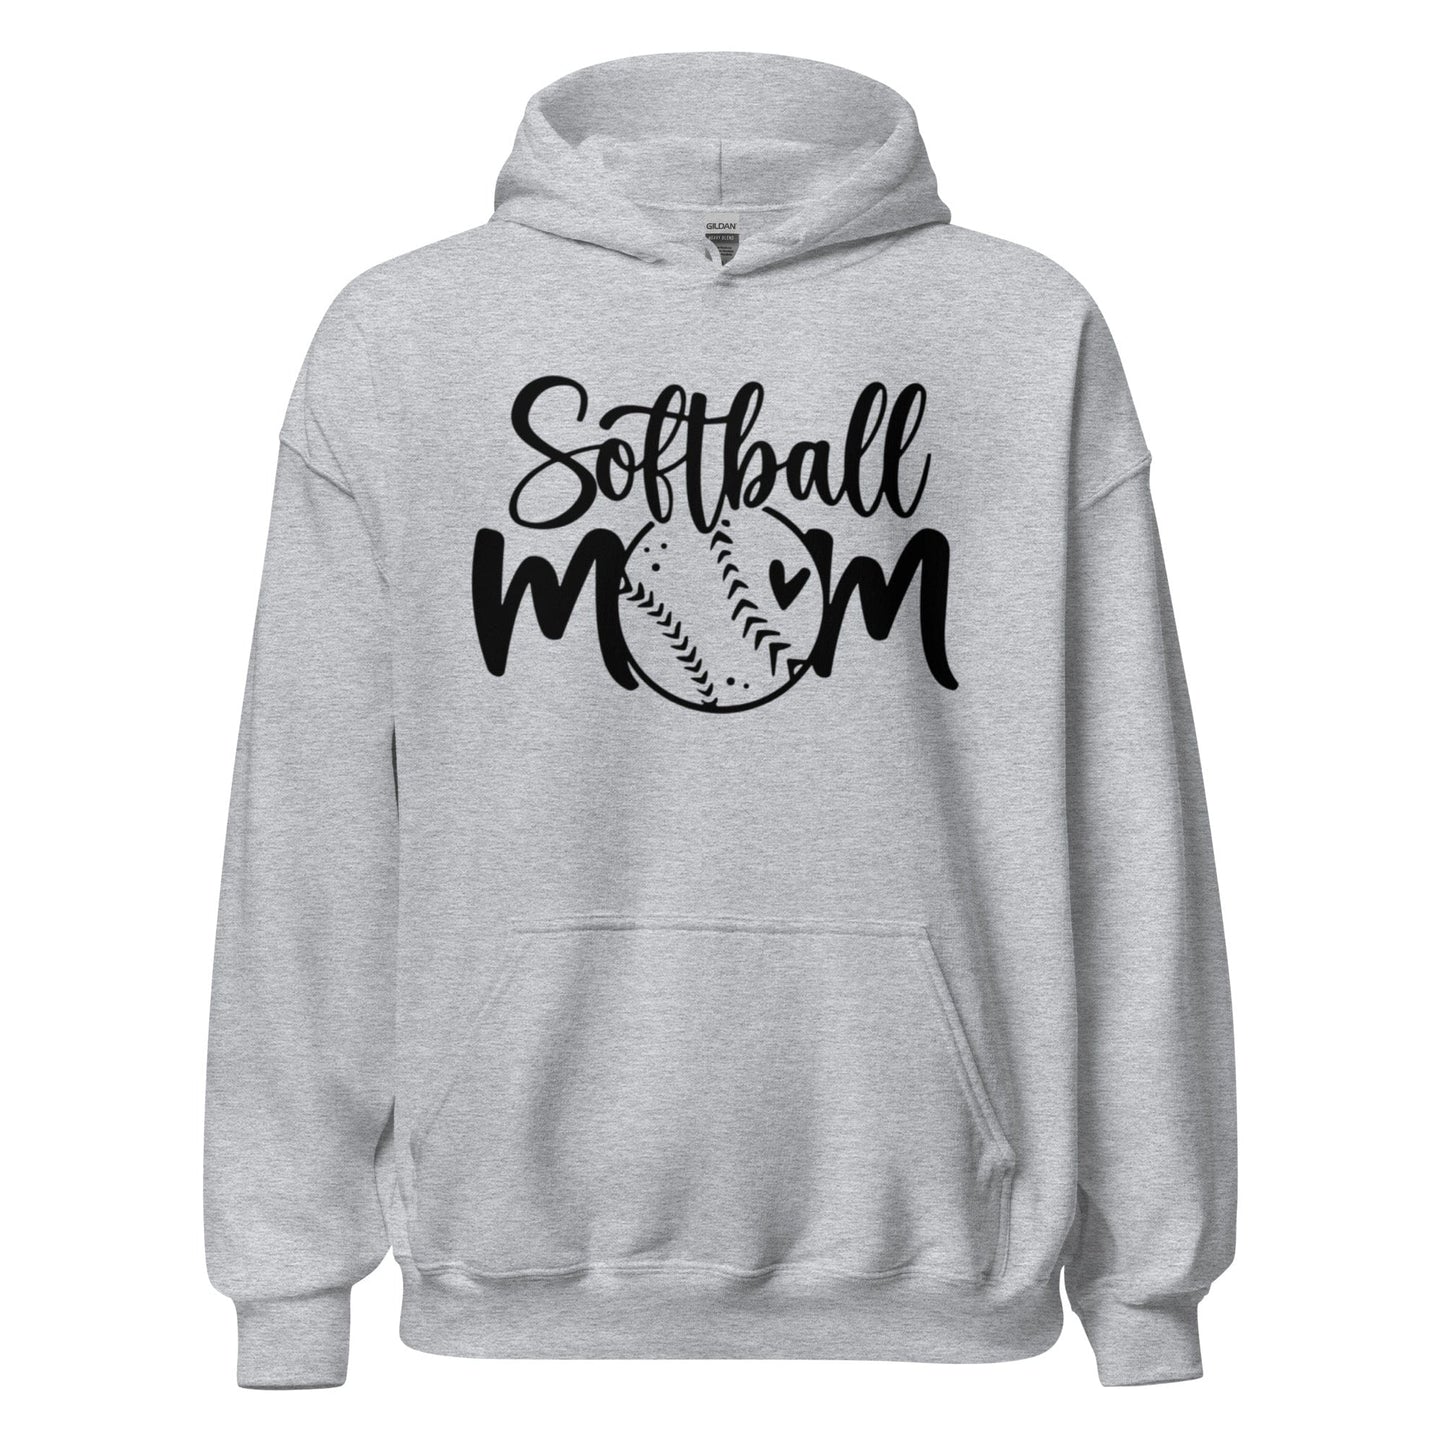 Softball Mom - Adult Hoodie